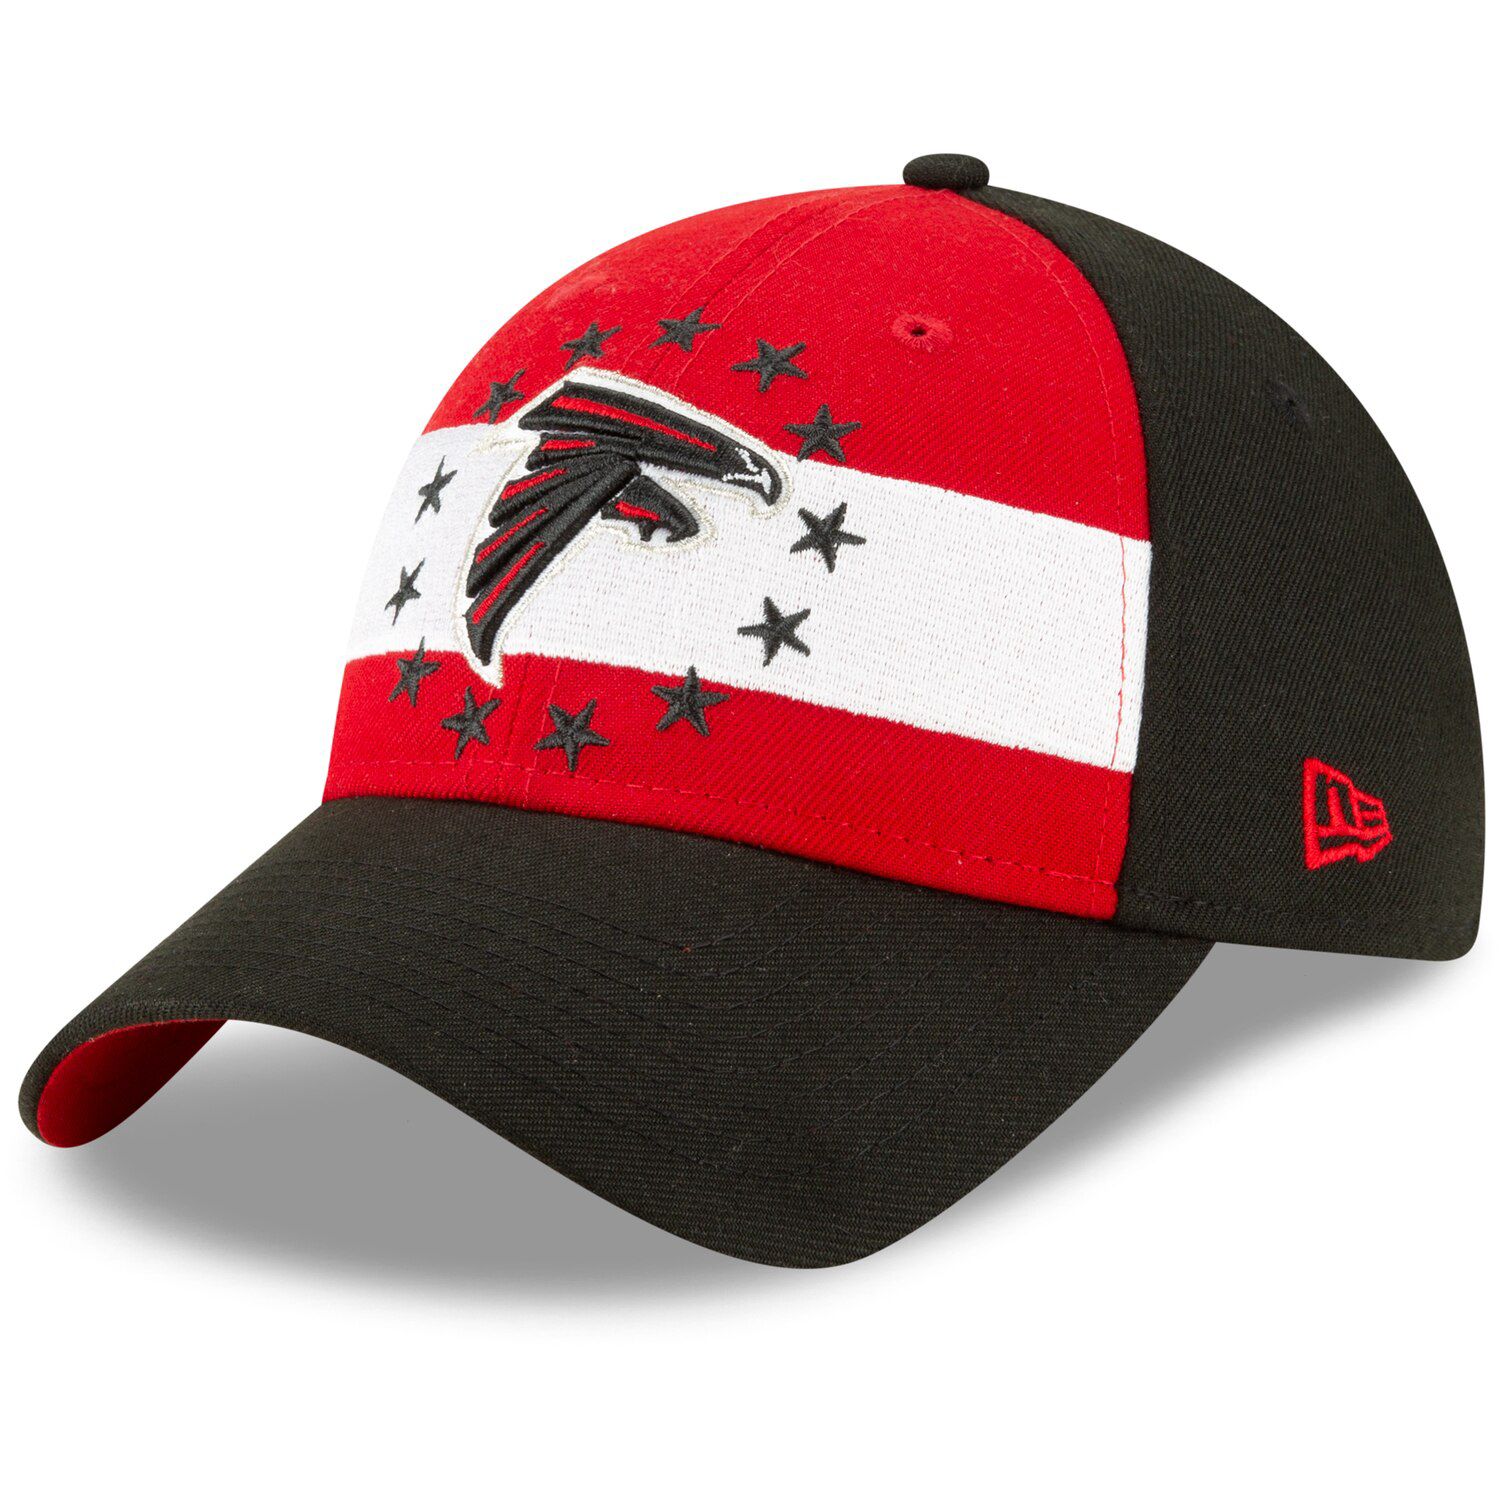 women's atlanta falcons hat